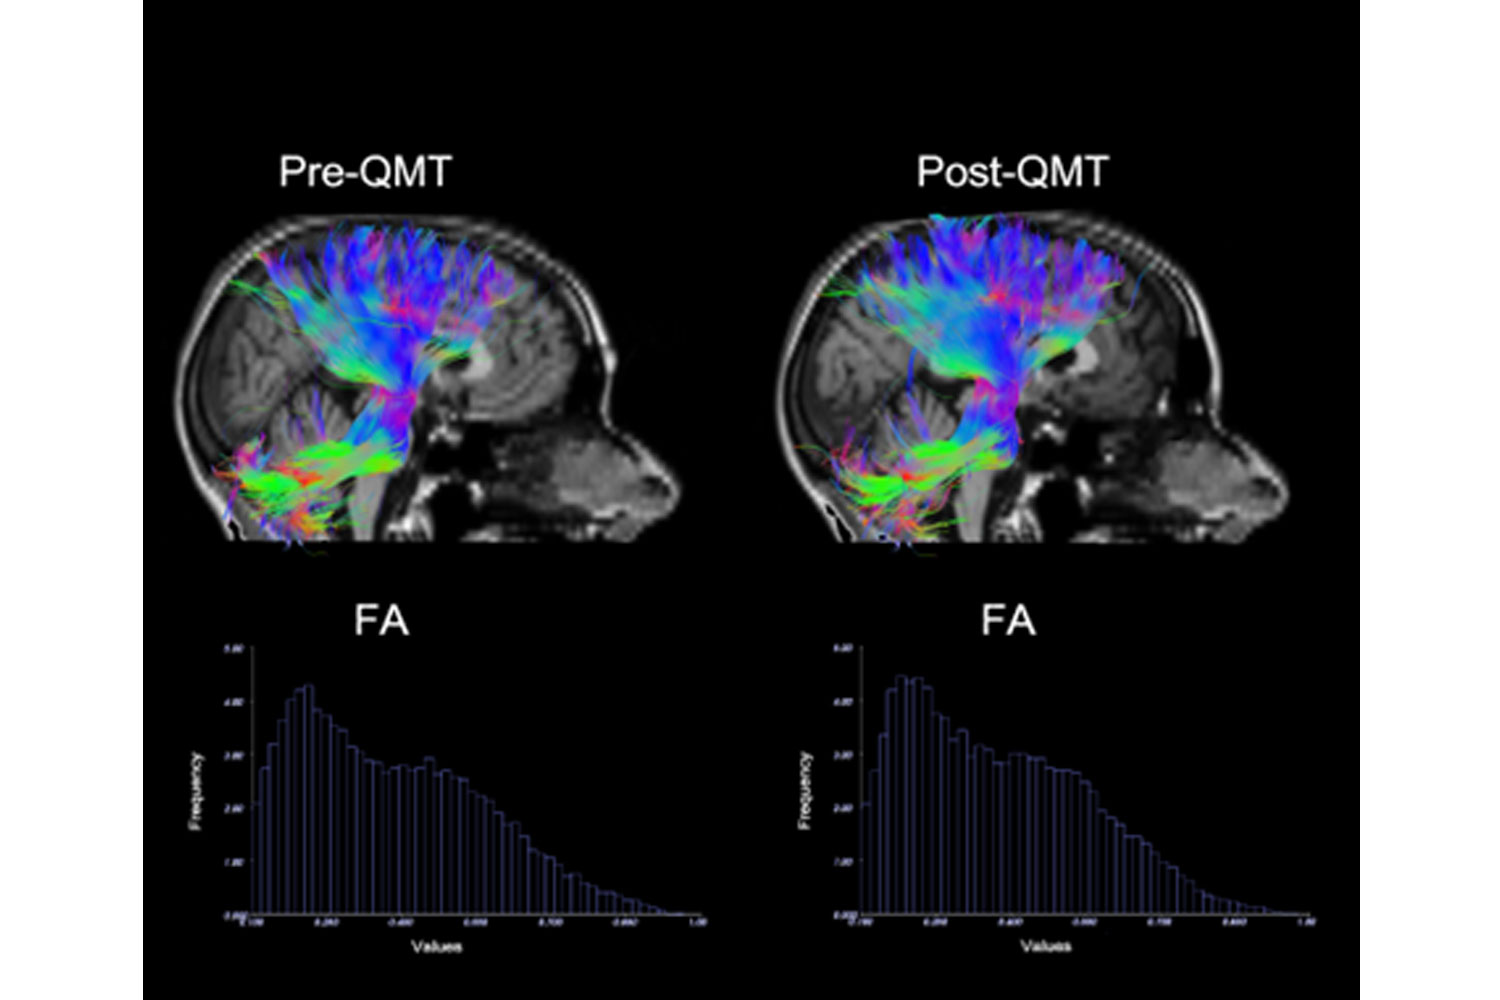 Increased Corona Radiata And Cerebellar Tracts Following Quadrato Motor Training: A Pilot Diffusion Tensor Imaging Study